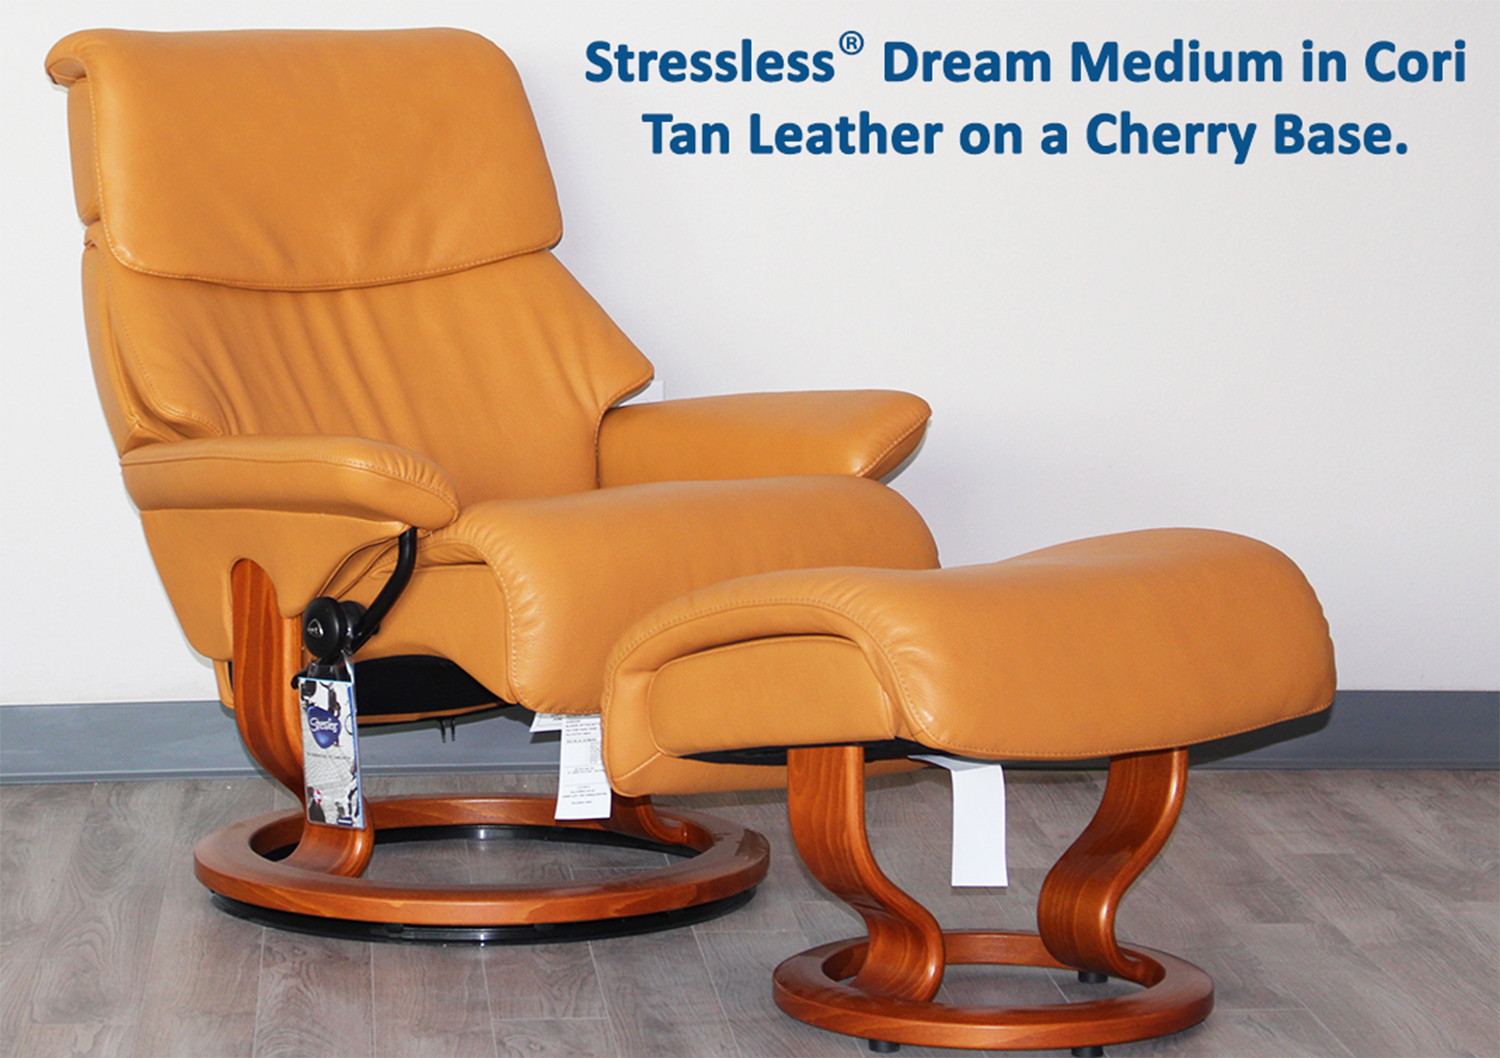 Cori by Leather Chairs Ekornes Dream Dream Medium Stressless Cori Medium Recliners - Tan Tan Stressless Leather